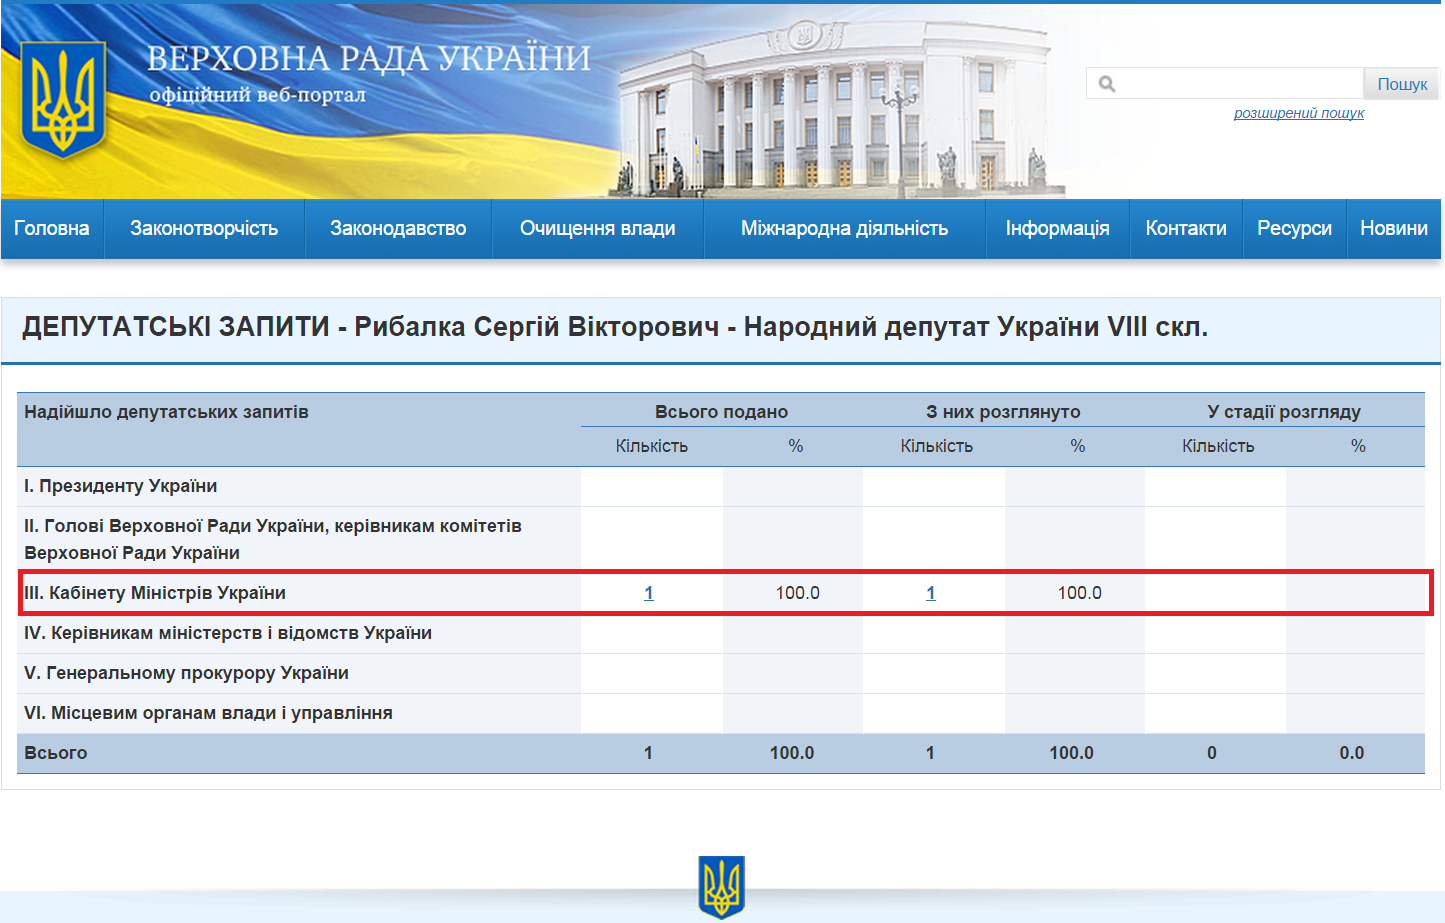 http://w1.c1.rada.gov.ua/pls/zweb2/wcadr42d?sklikannja=9&kod8011=18053